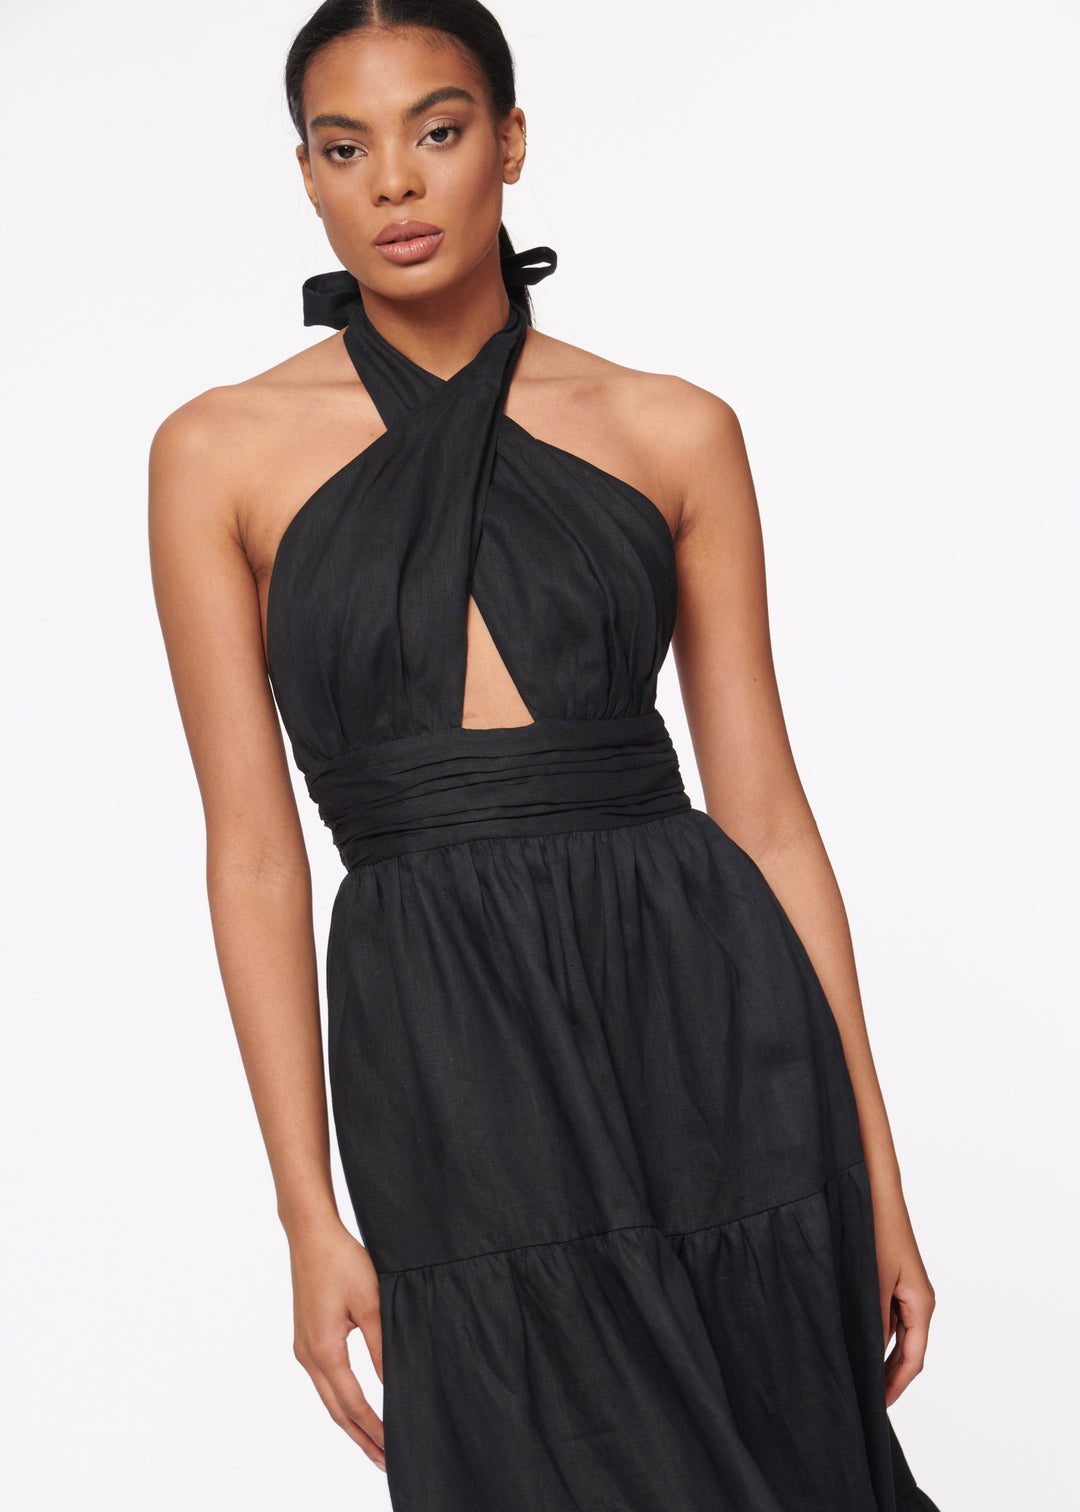 Cami NYC - Evita Dress in Black